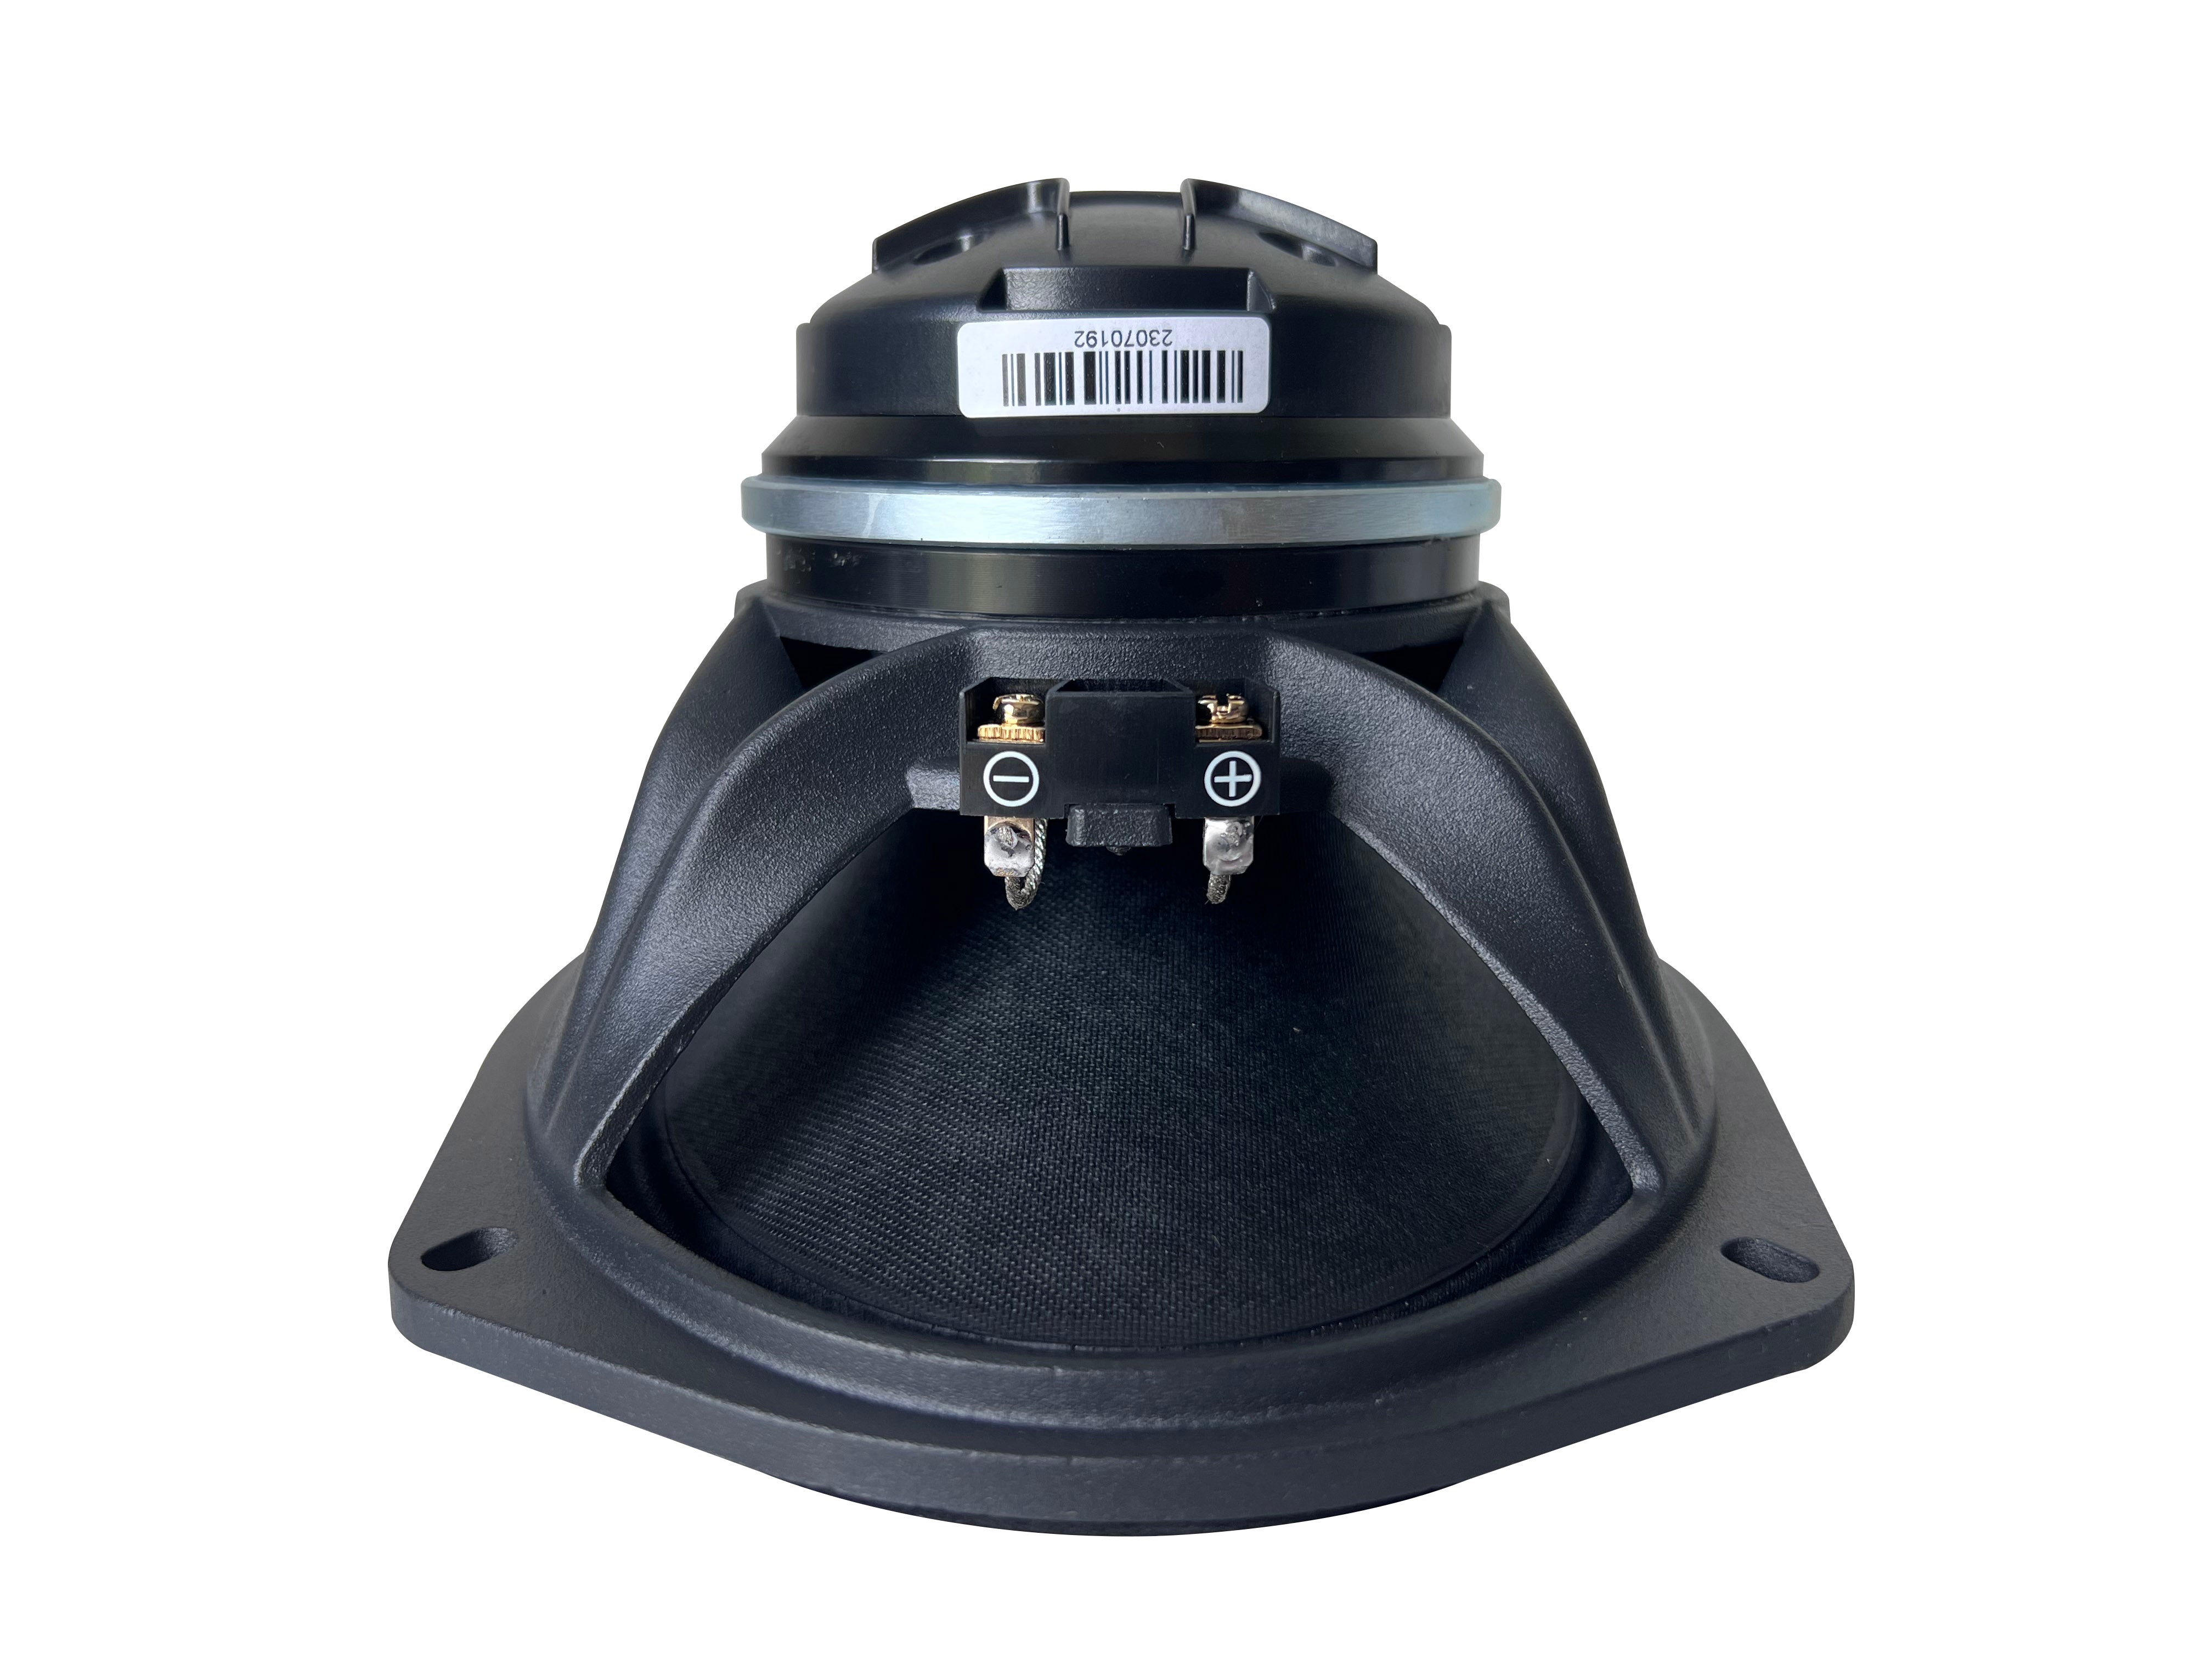 PNX69 | 6x9" 4 Ohm Mid-Range Pro Audio Coaxial Water Repellent Speaker - 180 Watts RMS